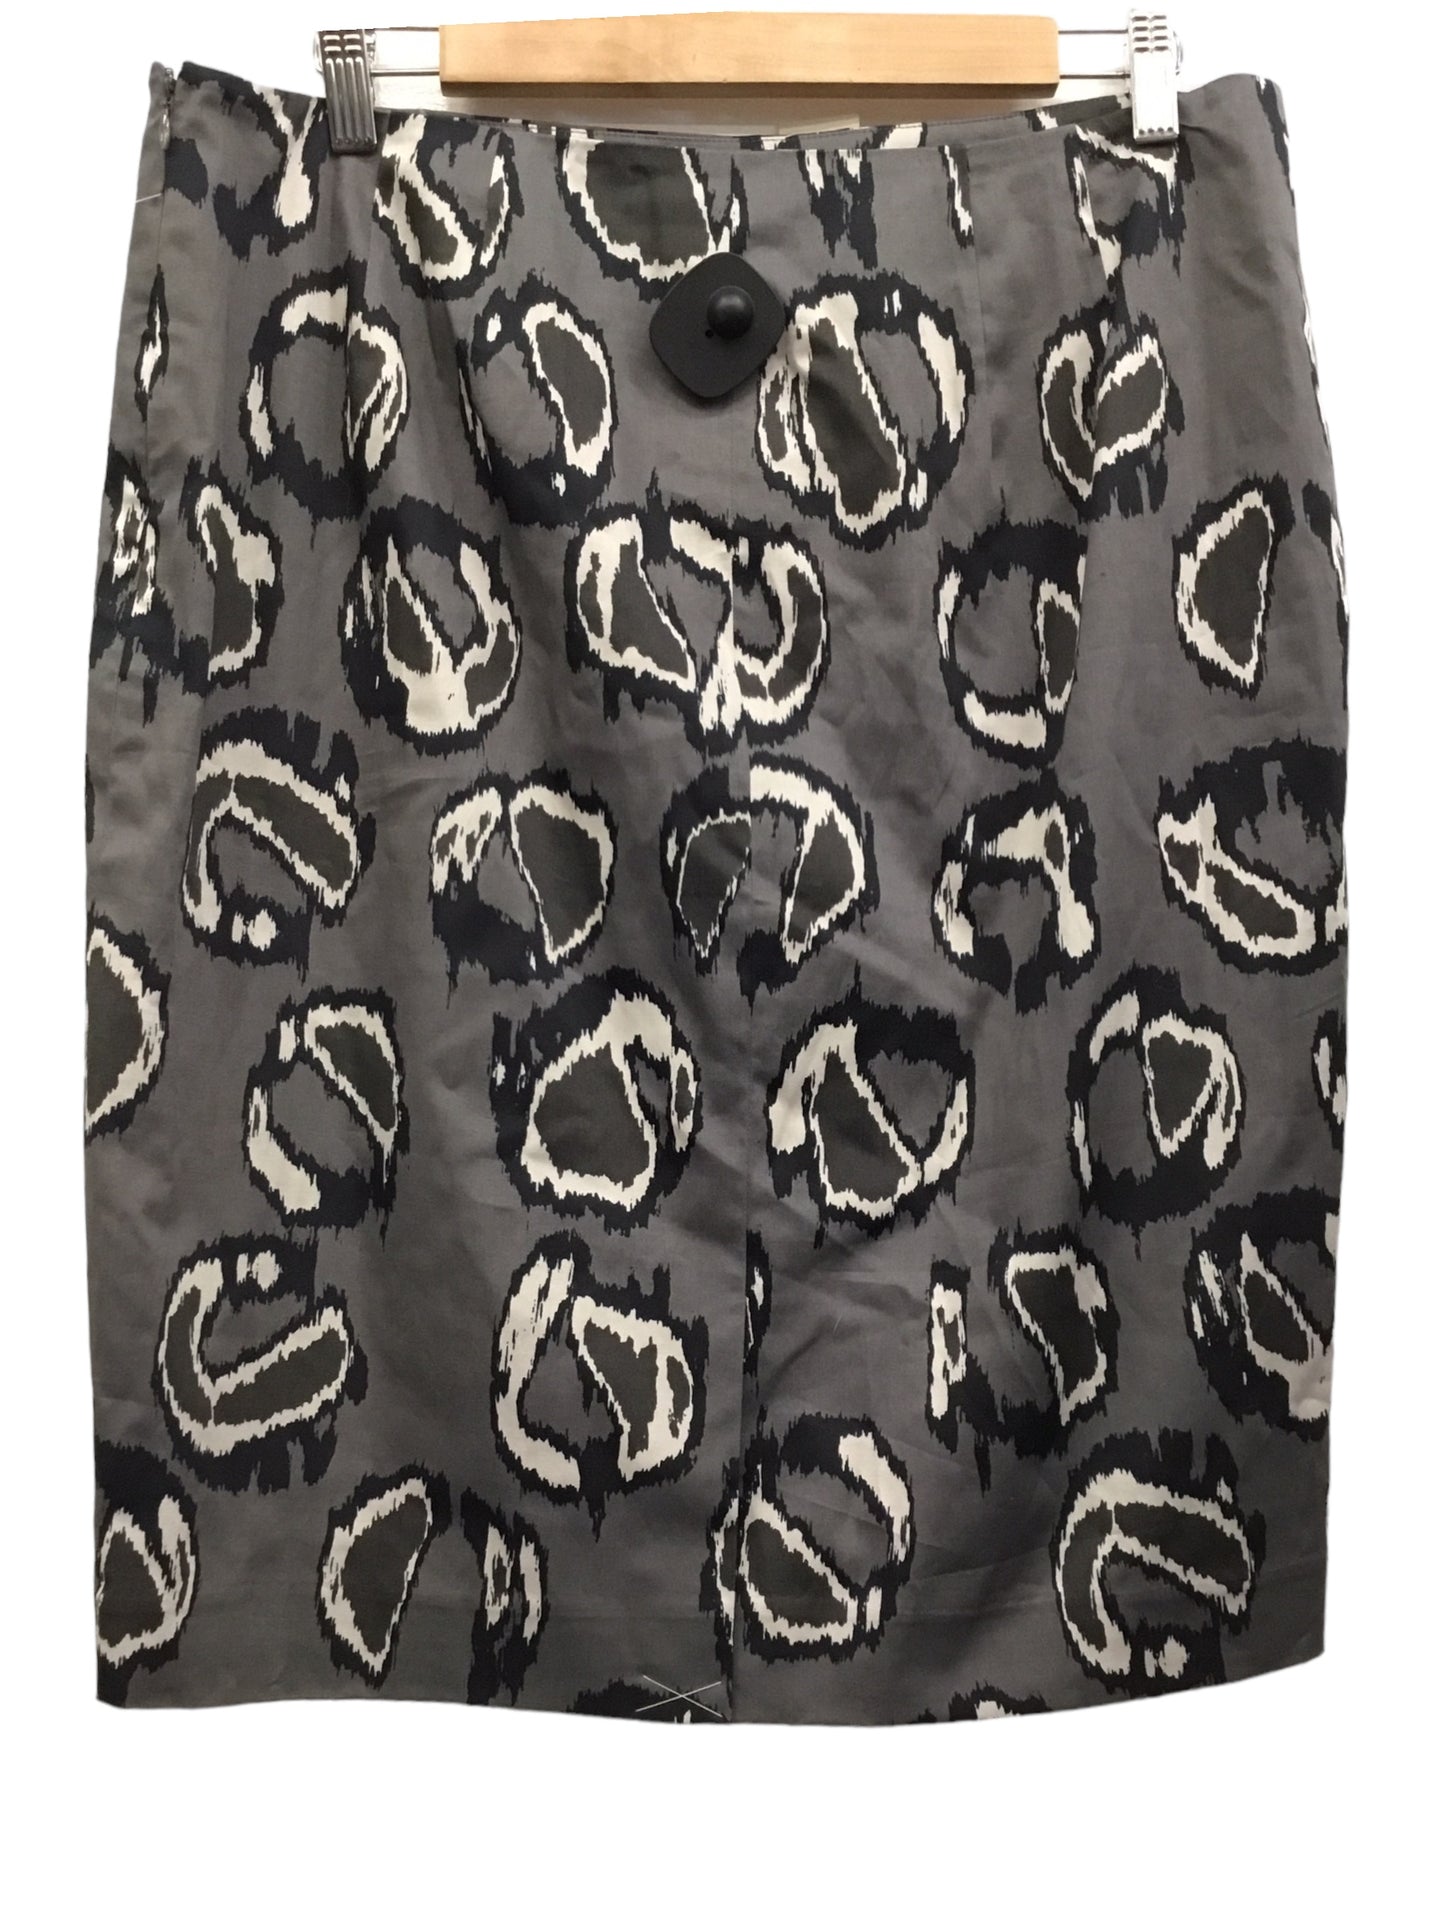 NWT Skirt Midi By Ann Taylor  Size: L